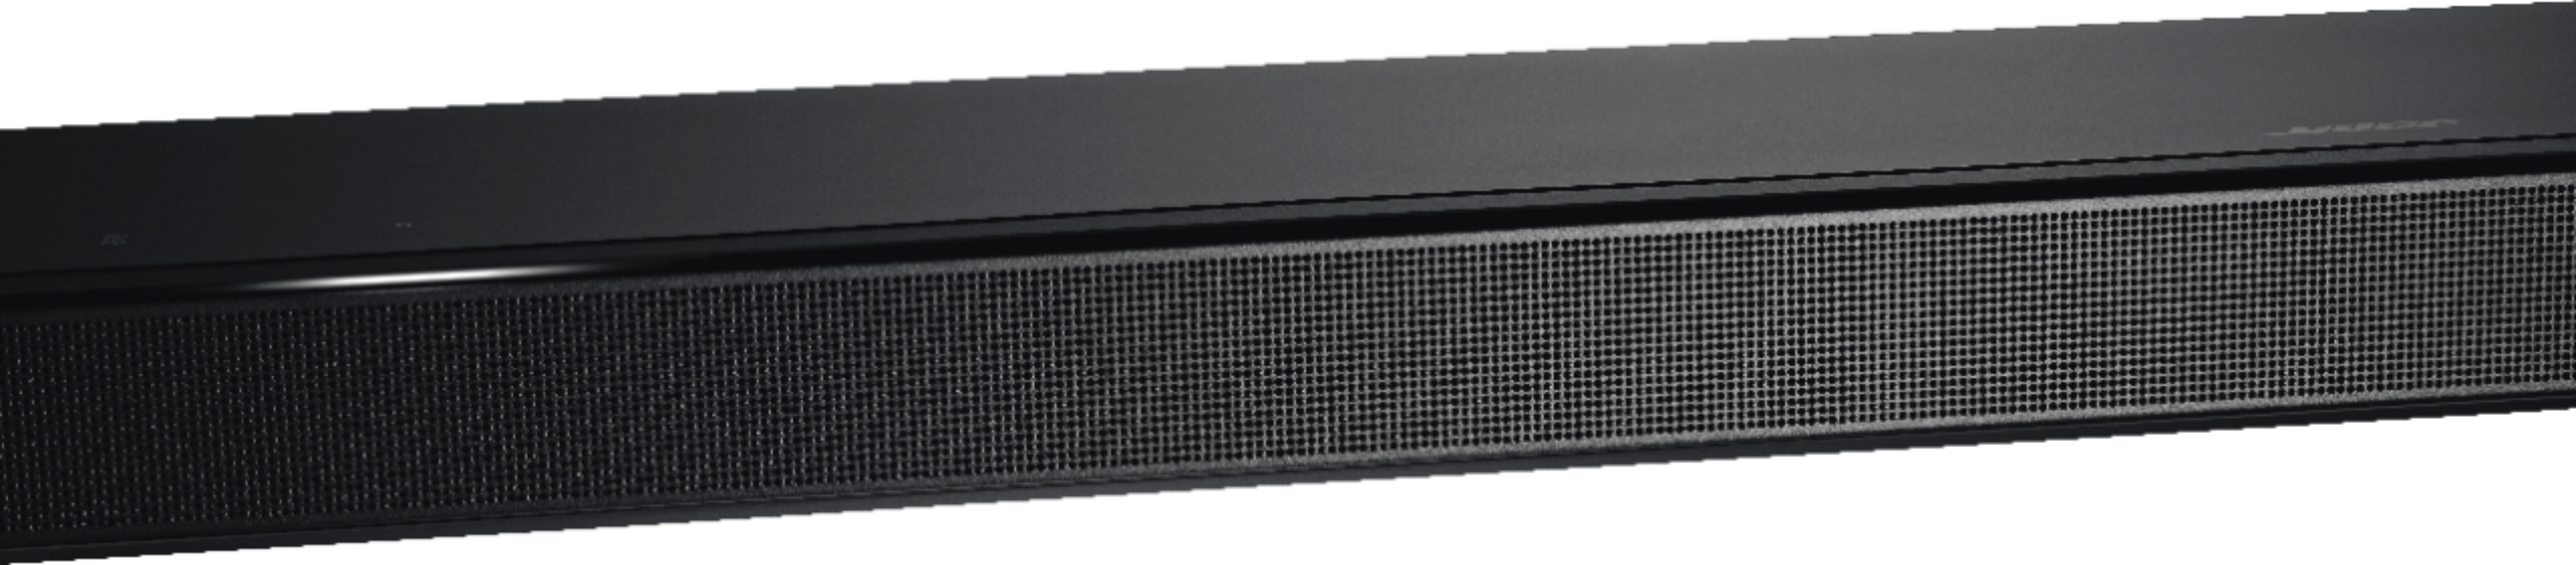 Best Buy: Bose Soundbar 500 Smart Speaker with Amazon Alexa and